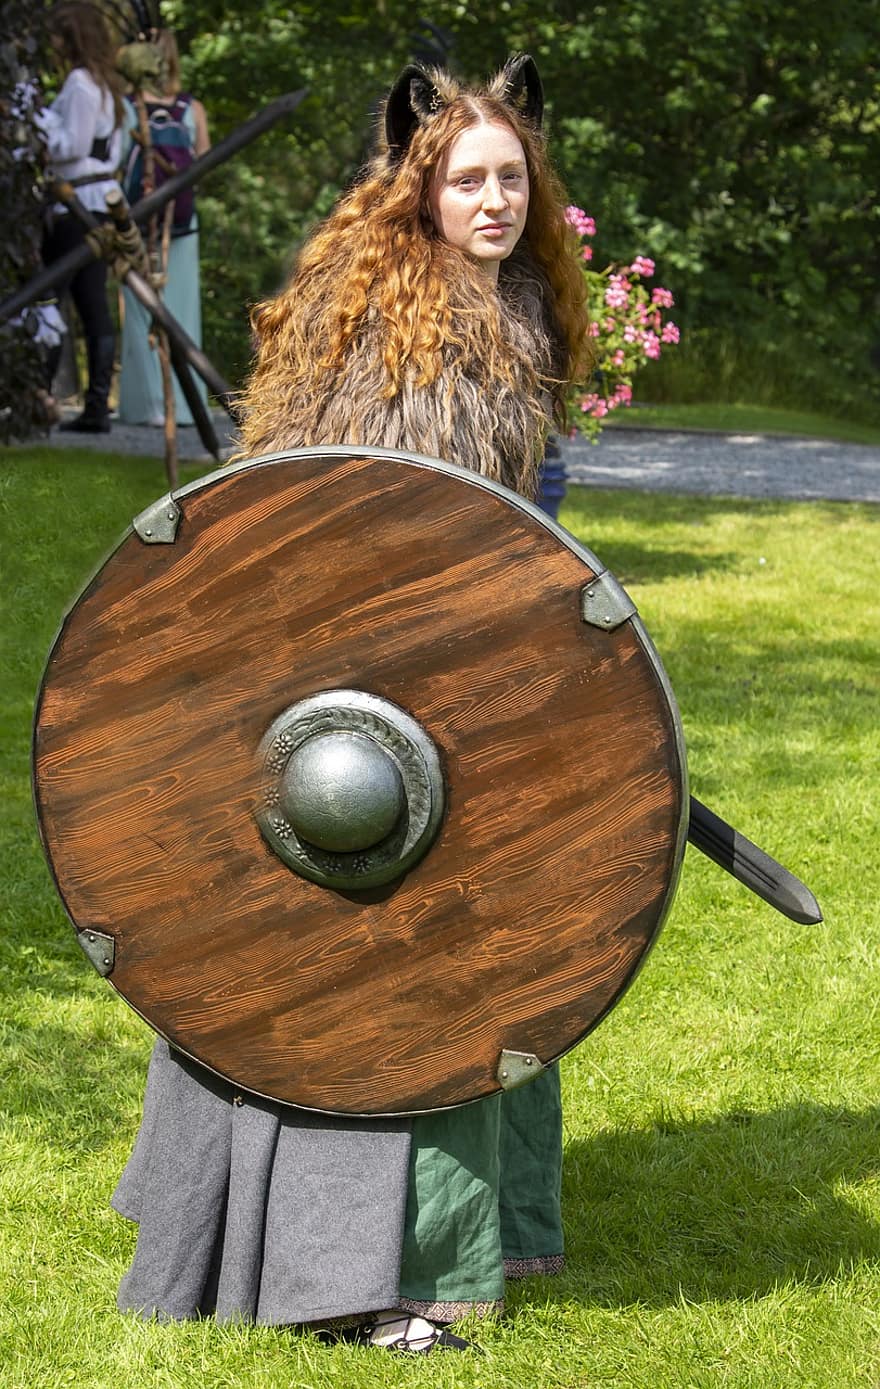 Viking, Woman, Costume, Warrior, Fantasy, Female, Sword, Shield, Fighter